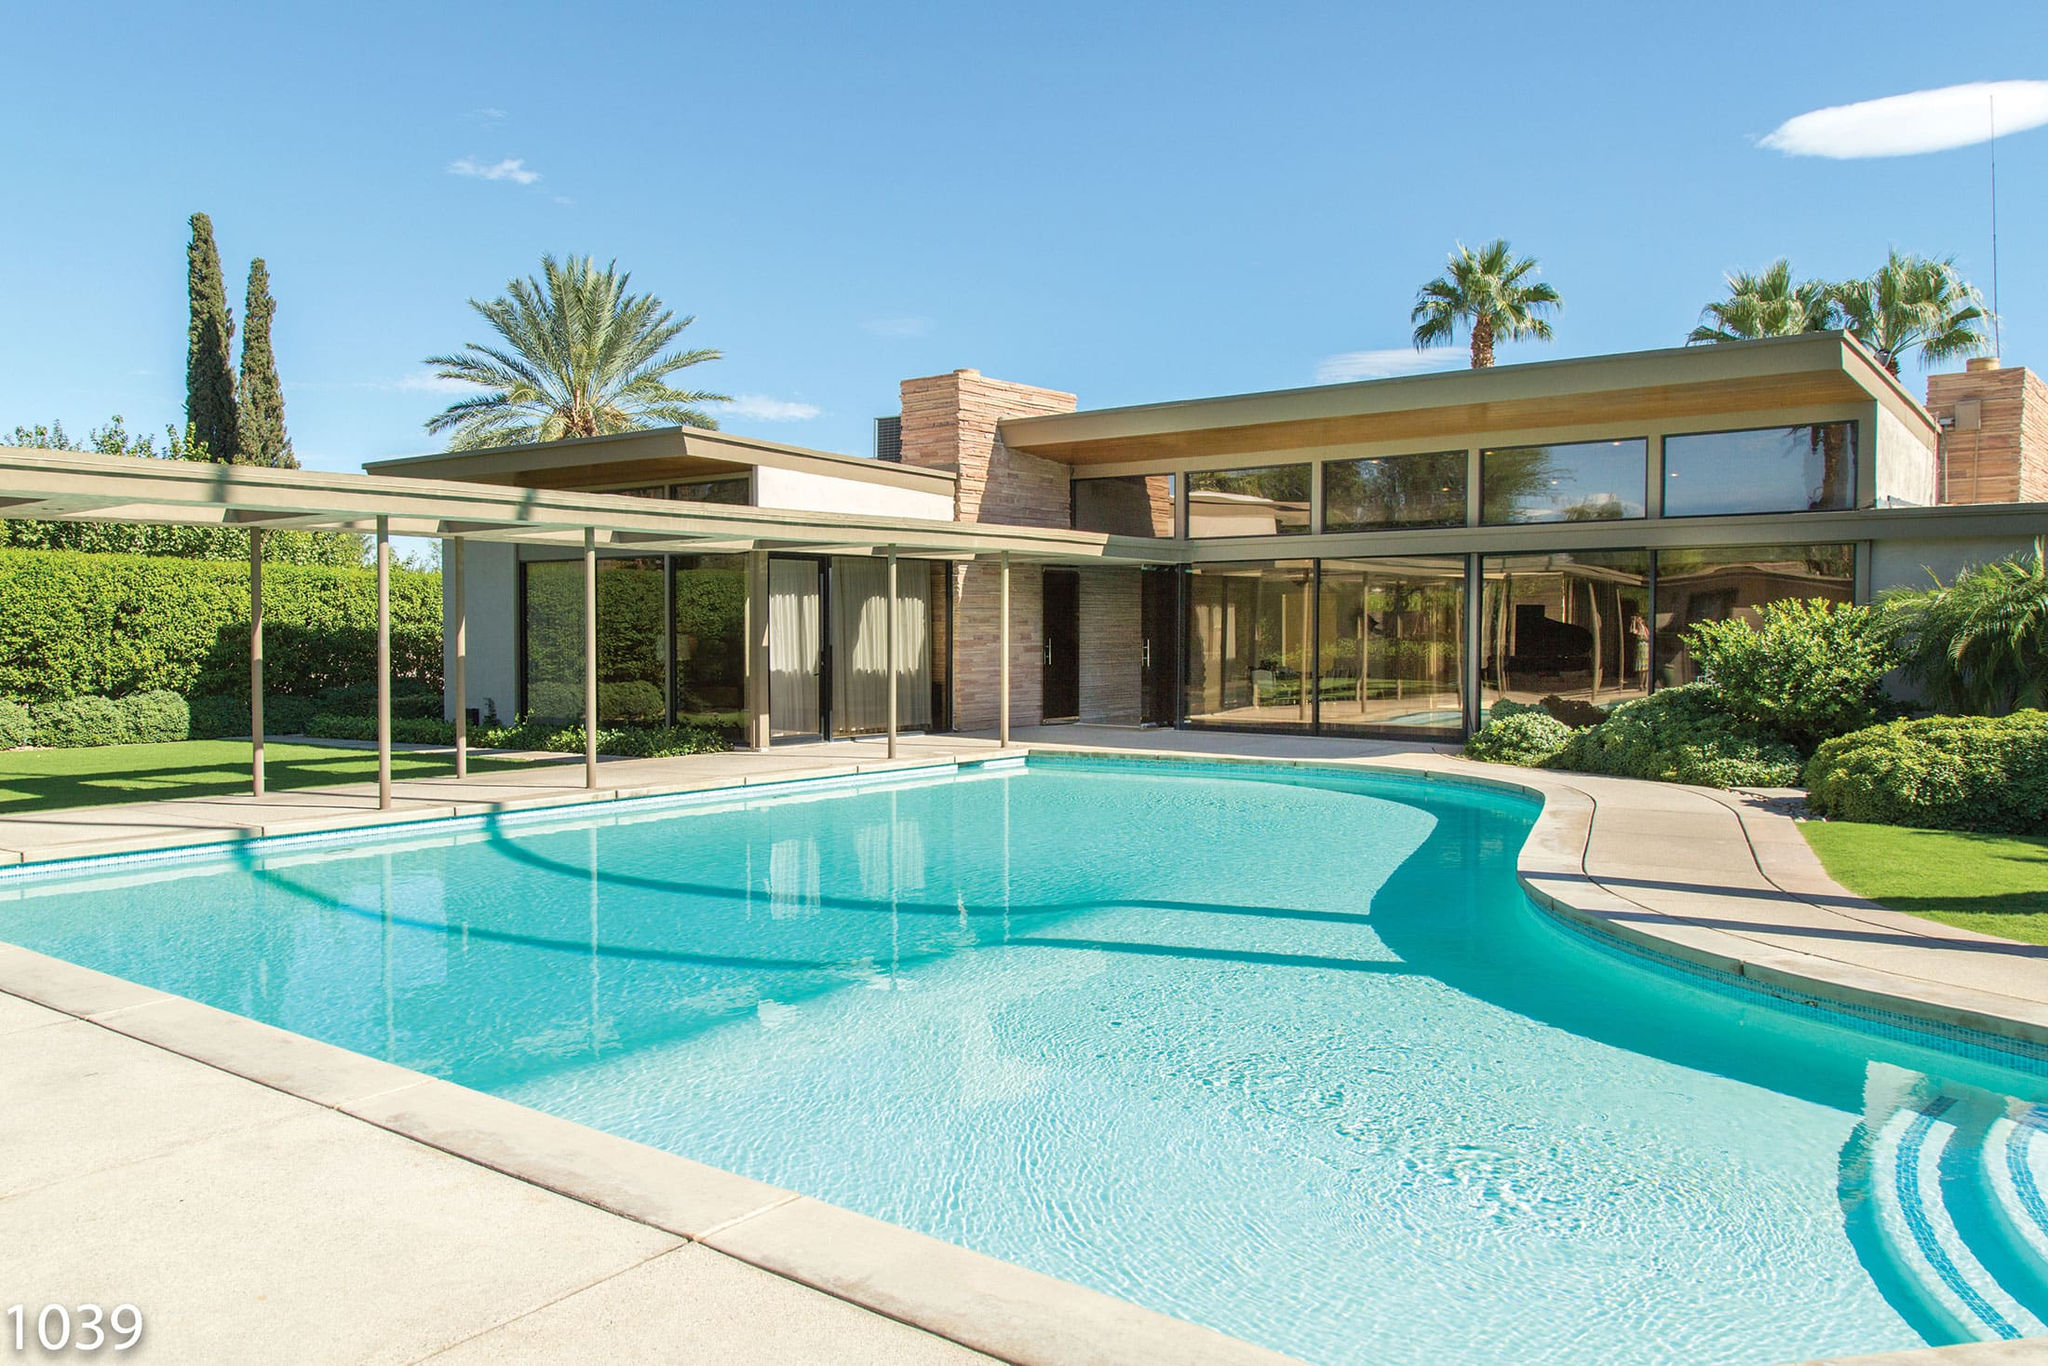 Frank Sinatra's Twin Palms Estate (1039) in Palm Springs, California